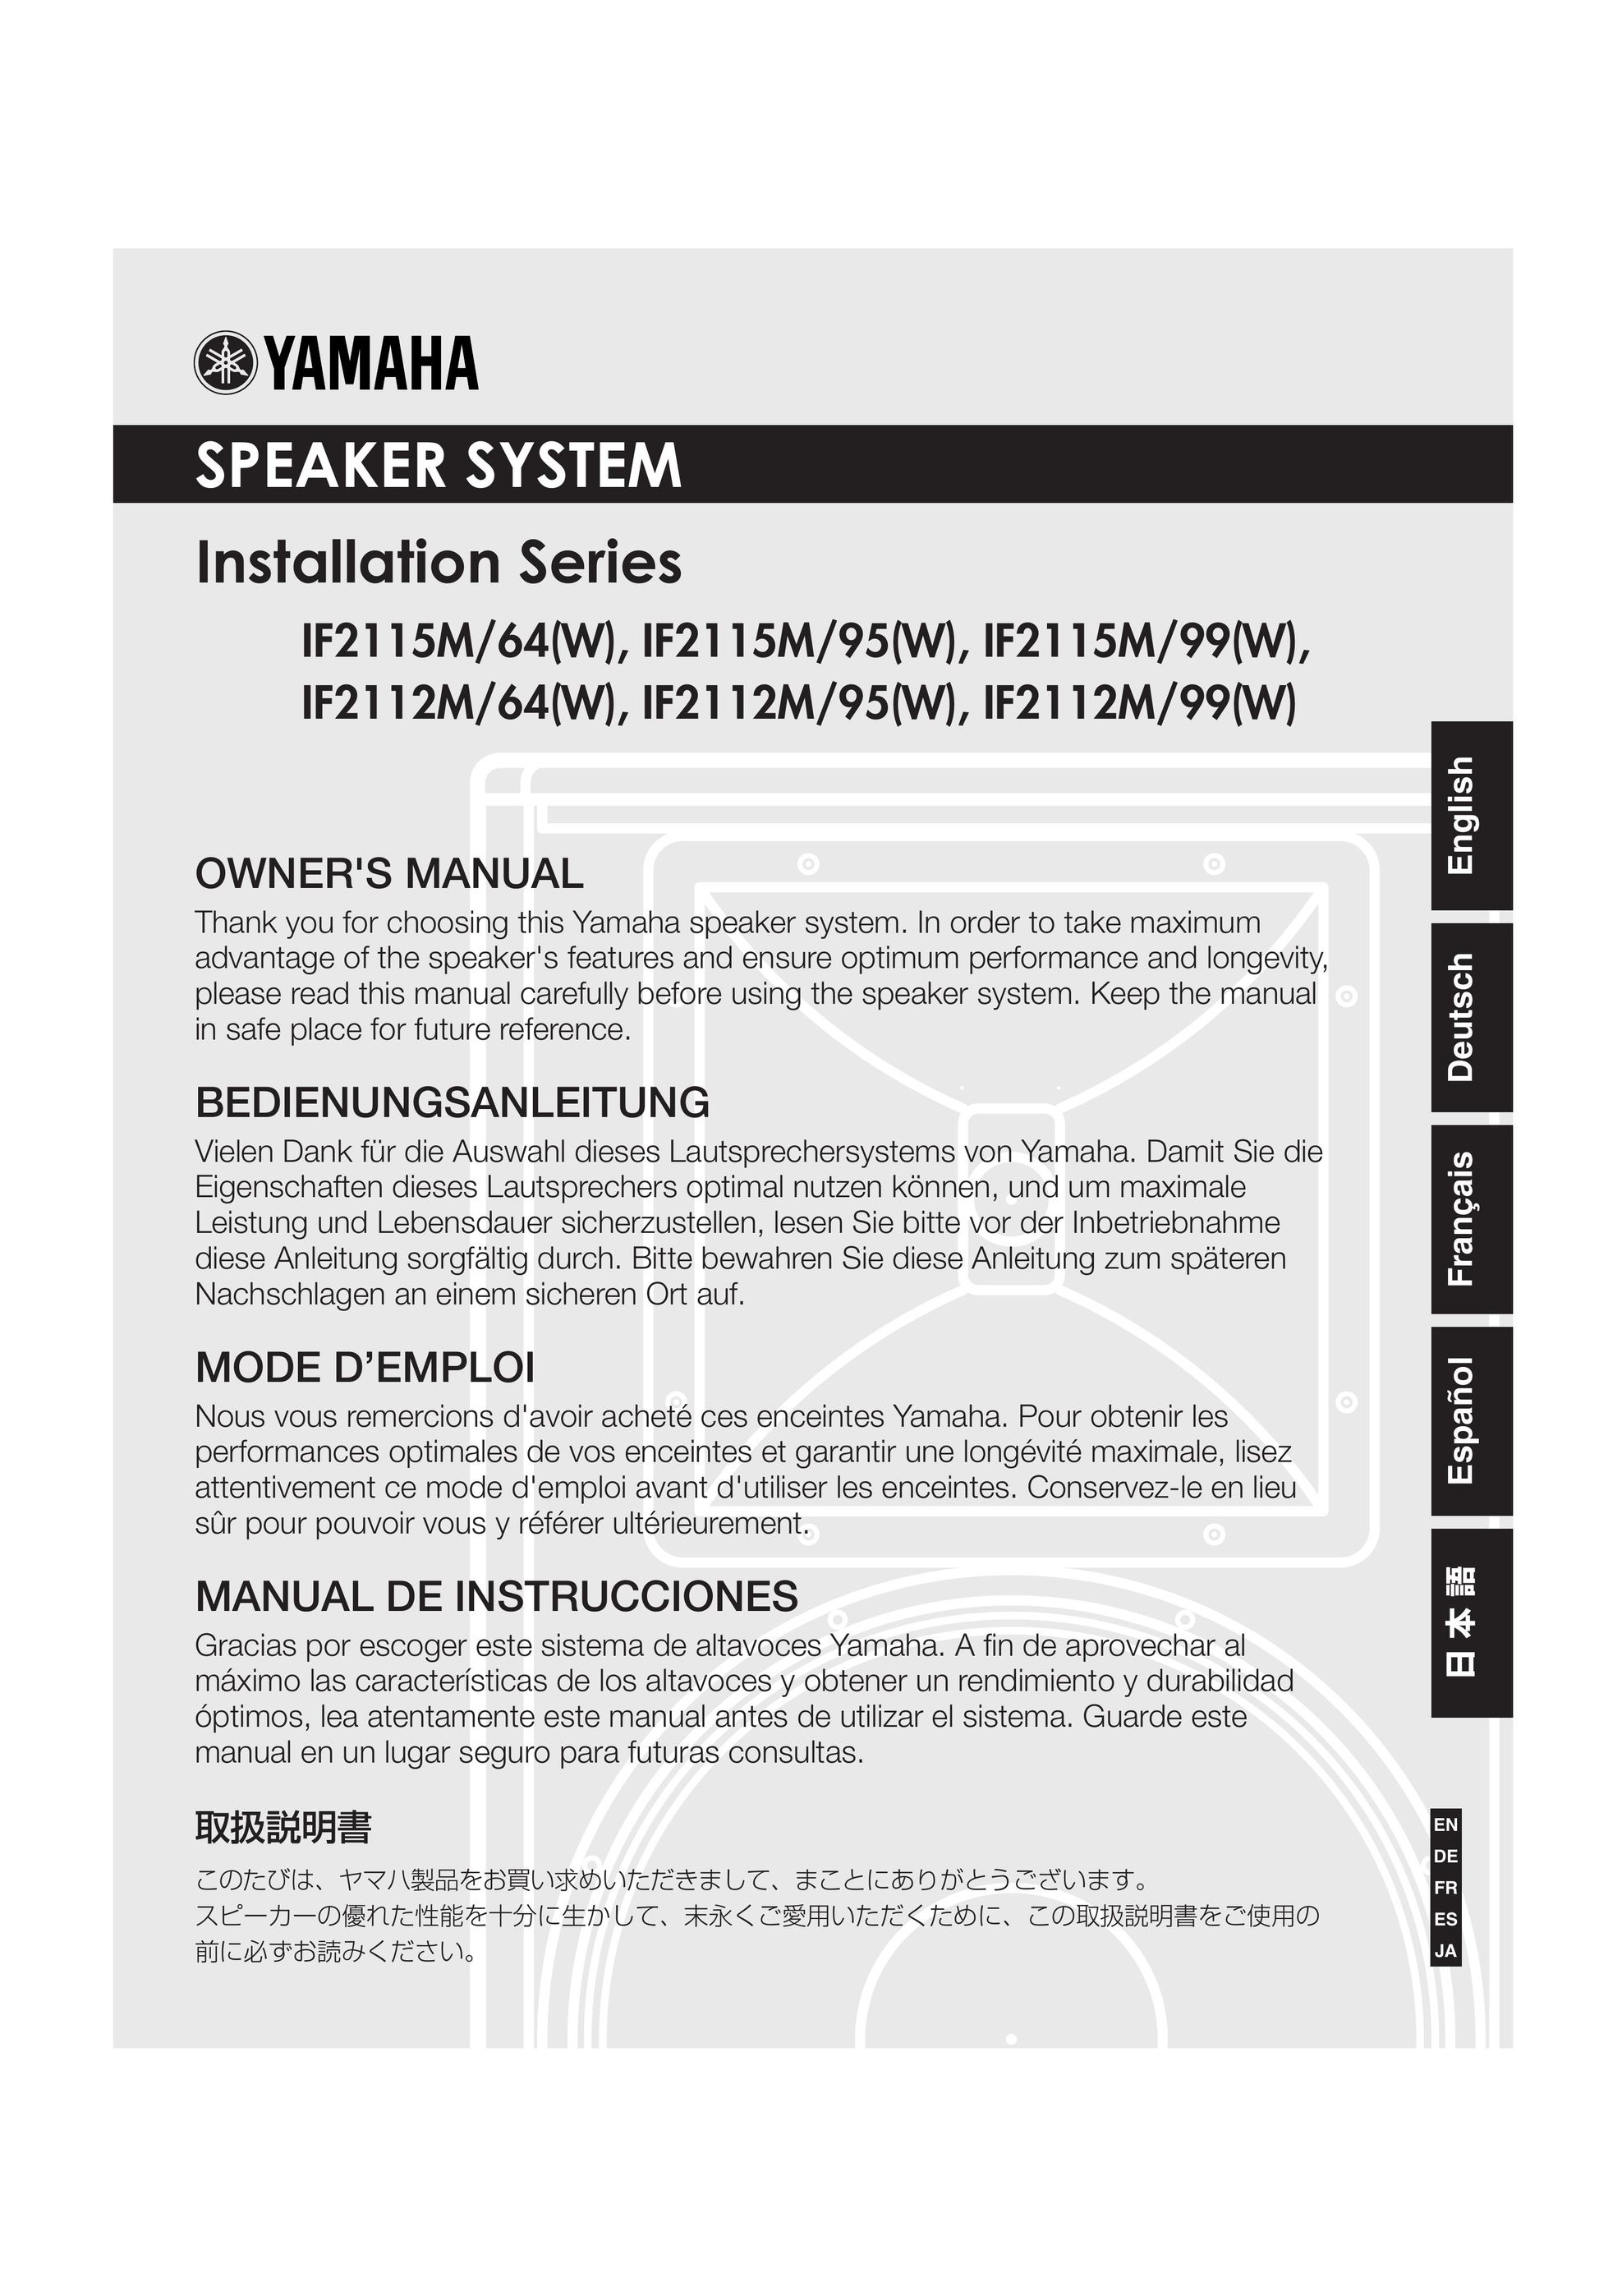 Yamaha IF2112M/95(W) Portable Speaker User Manual